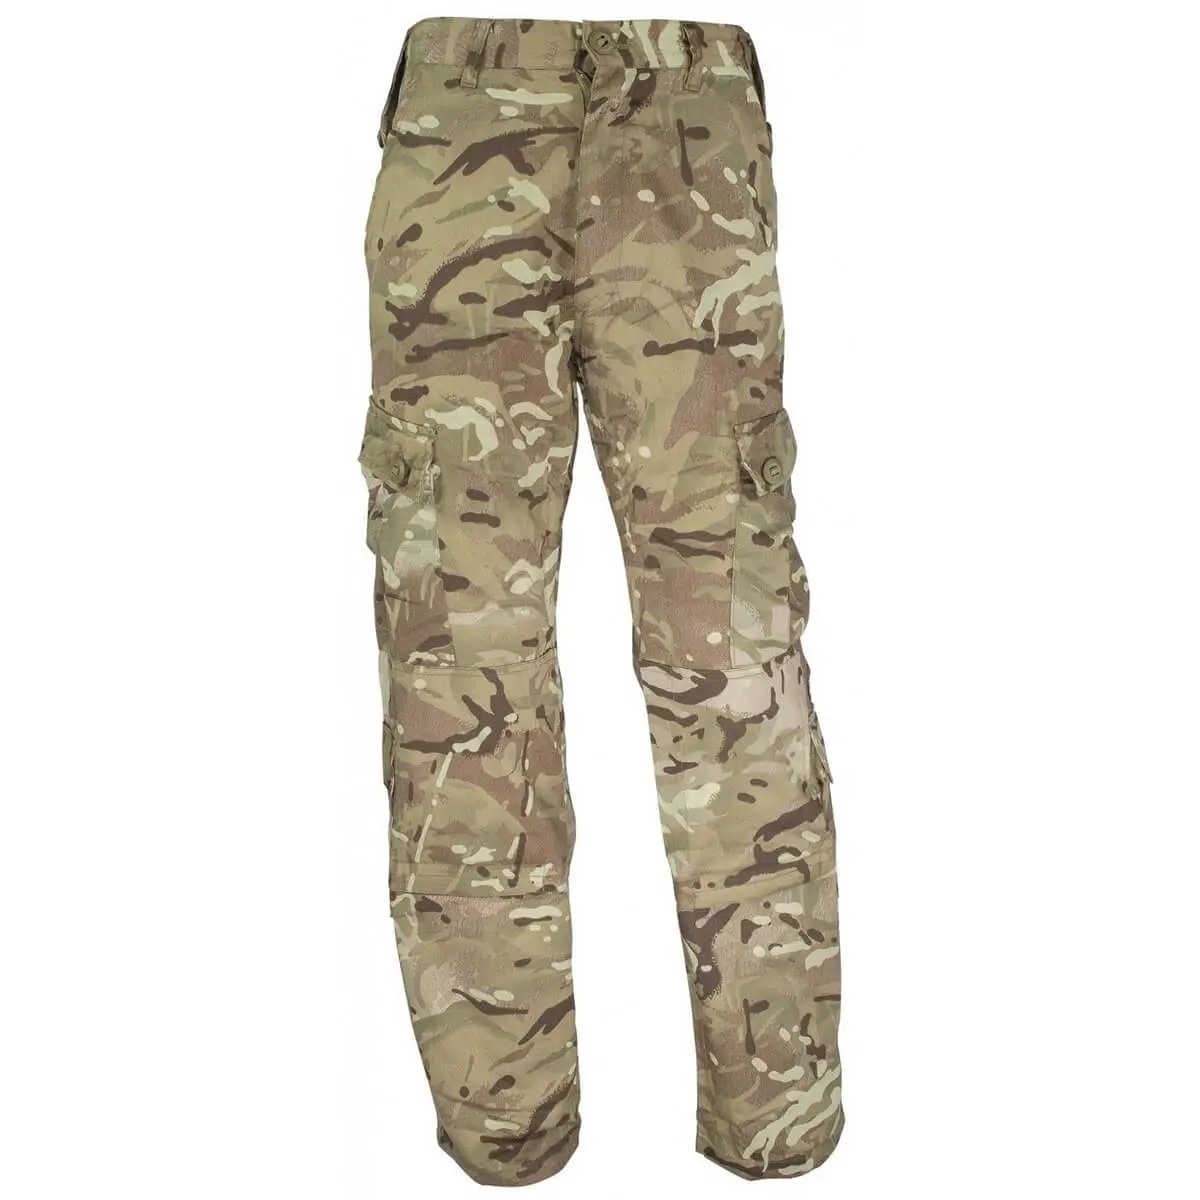 Highlander British Army Style Camo Combat Trousers - John Bull Clothing